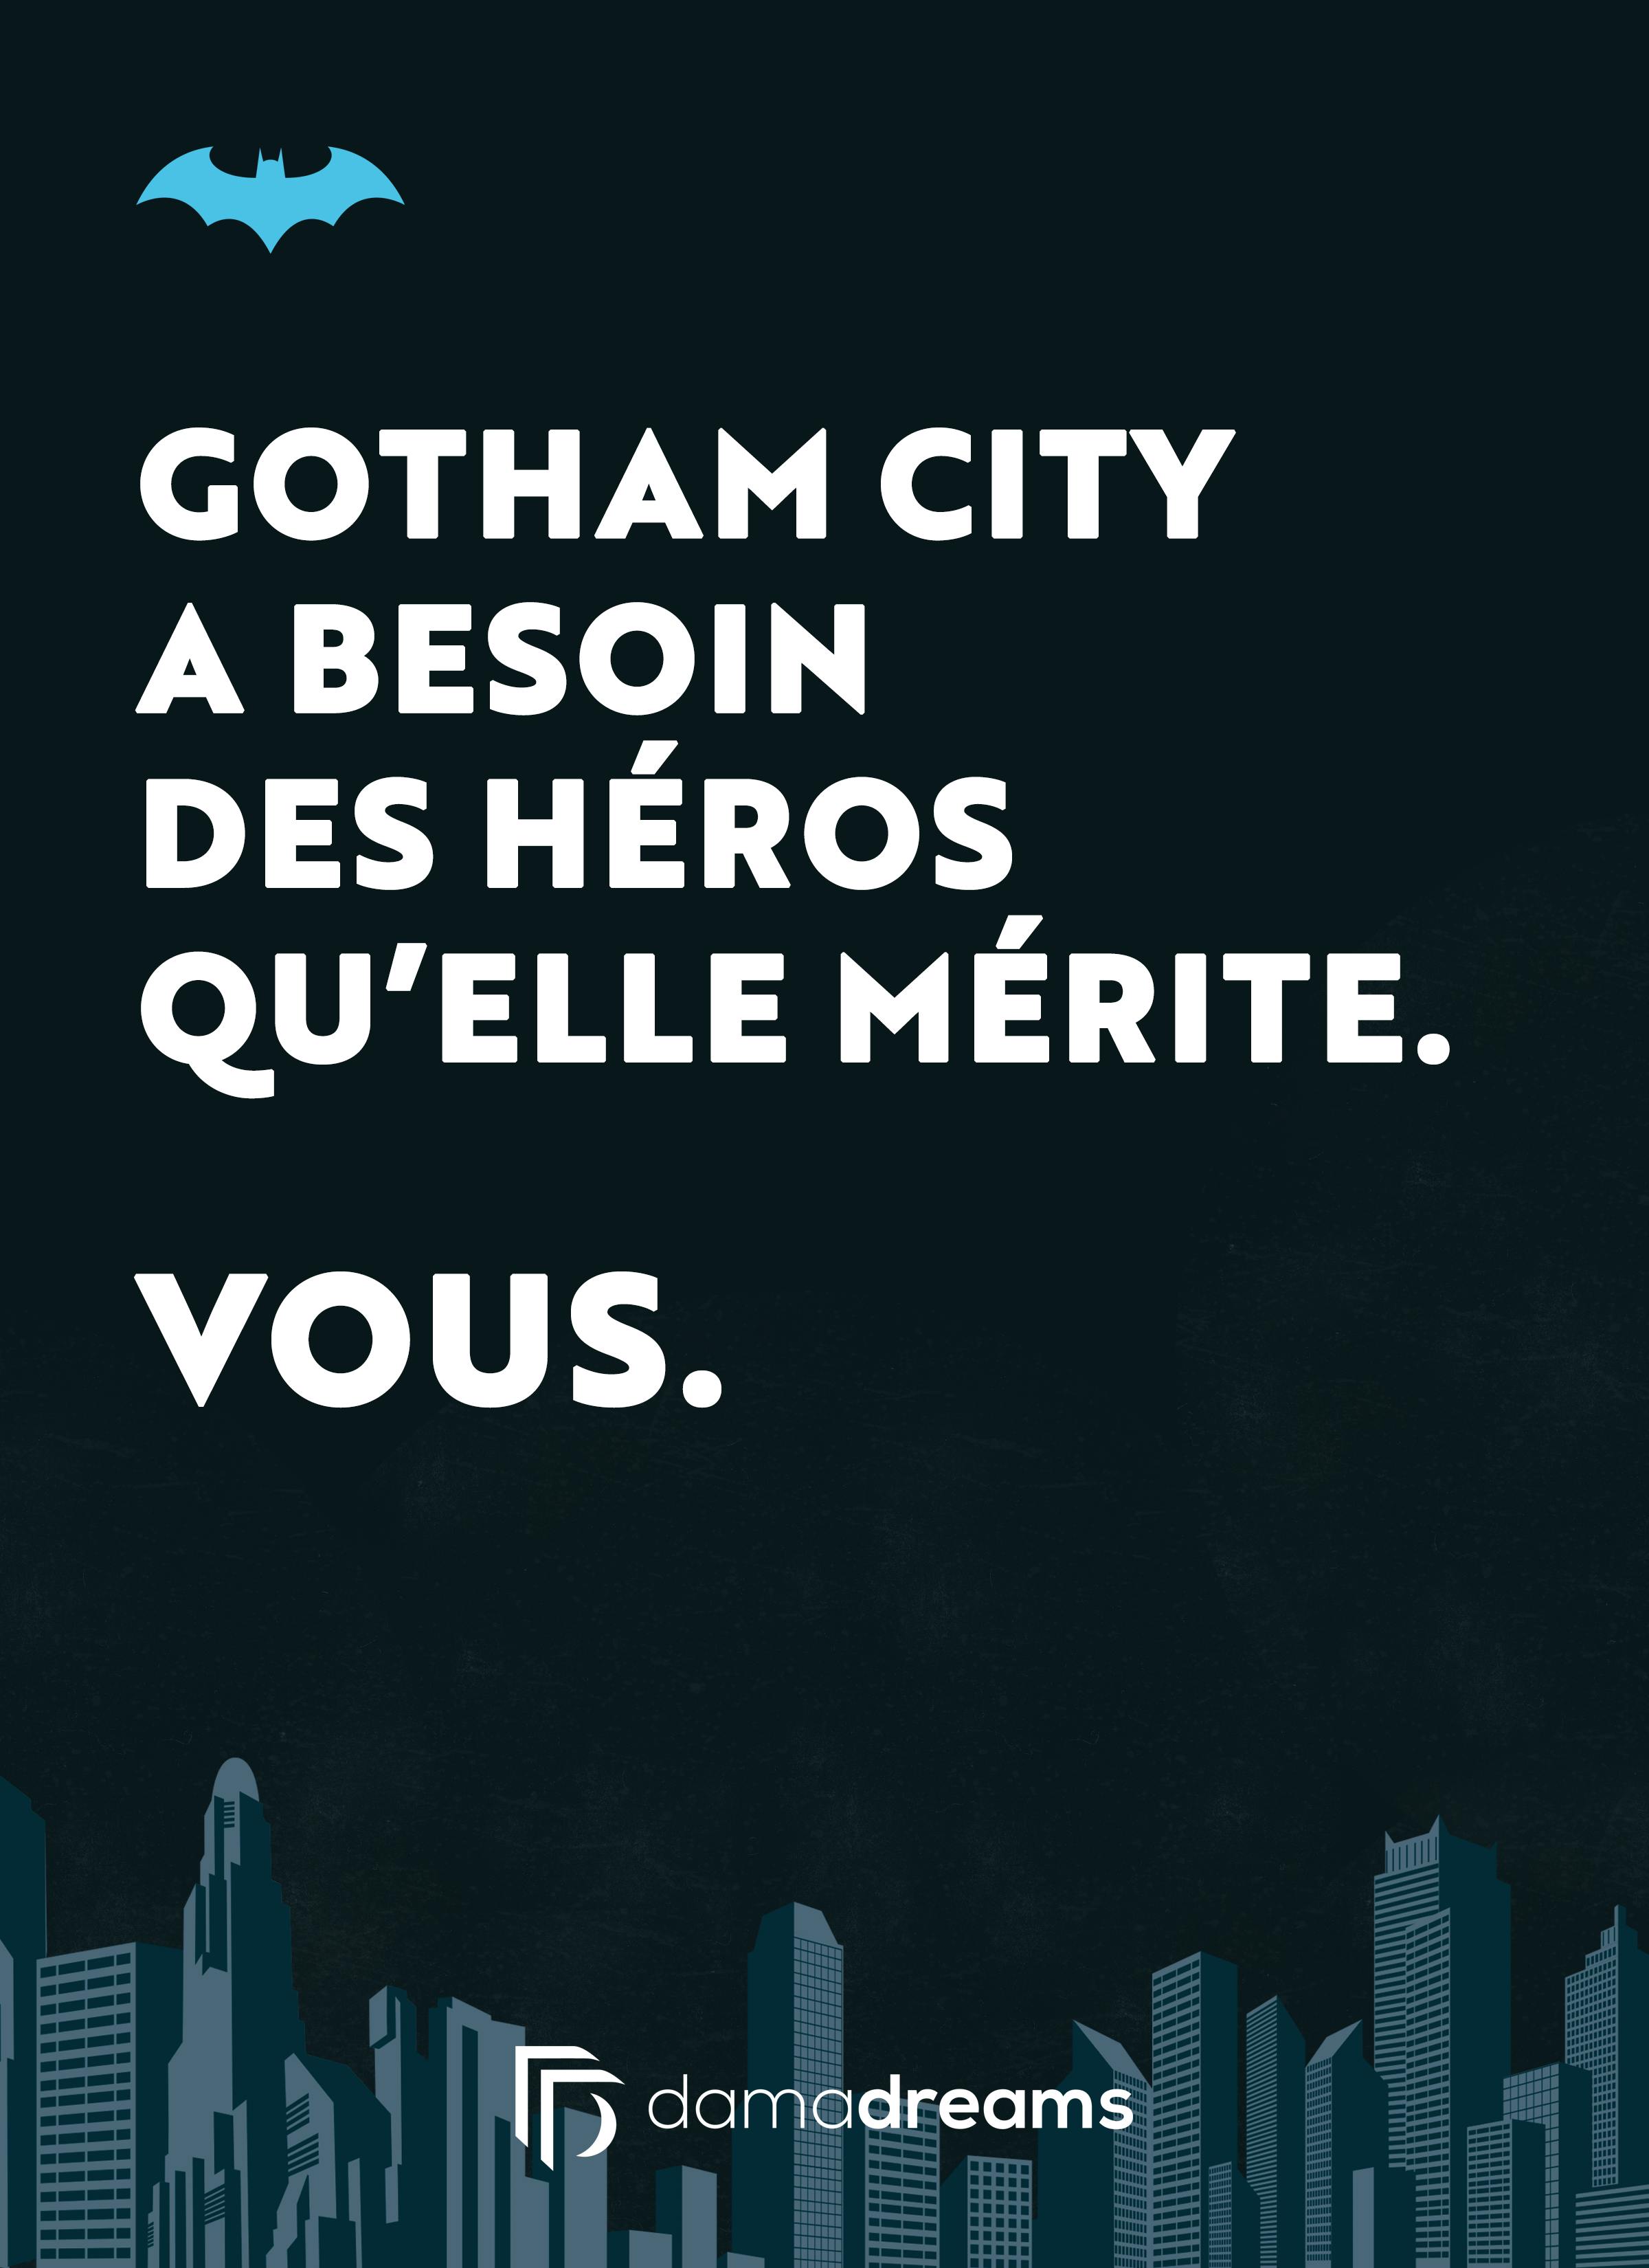 Gotham City a besoin de héros - Batman Escape